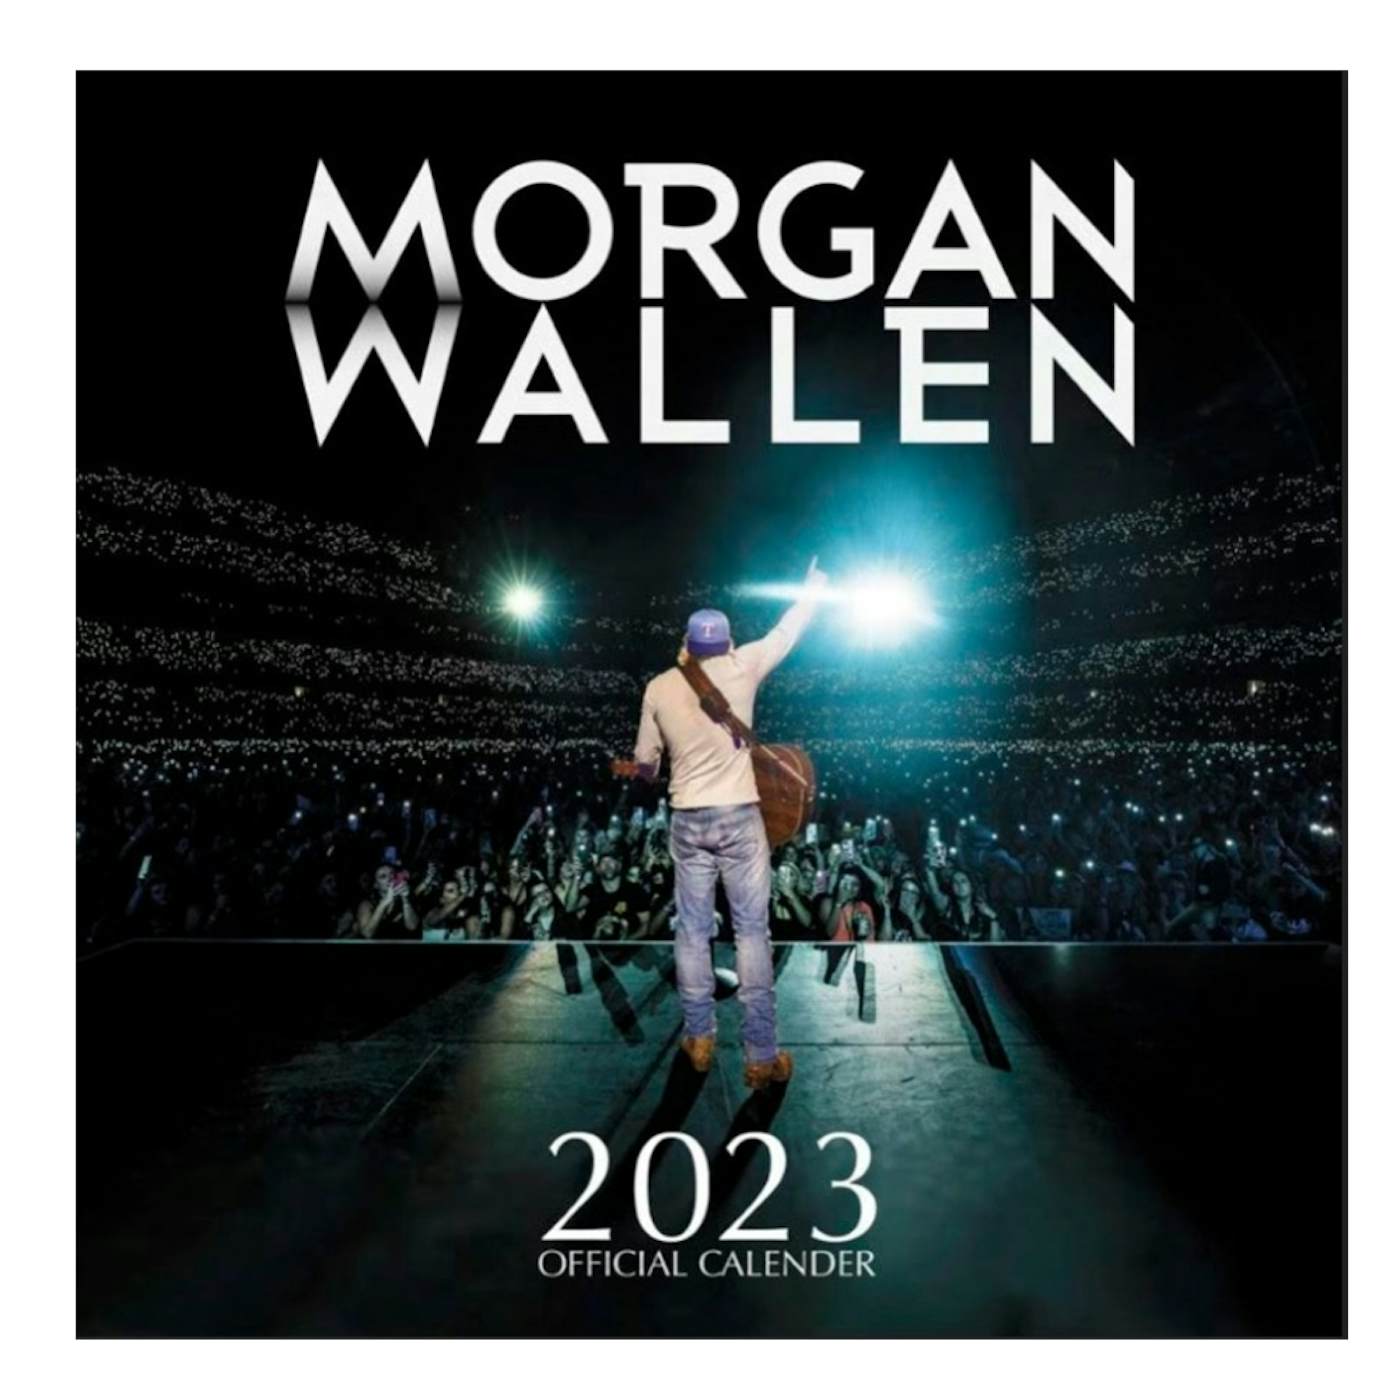 Morgan Wallen 2023 Calendar